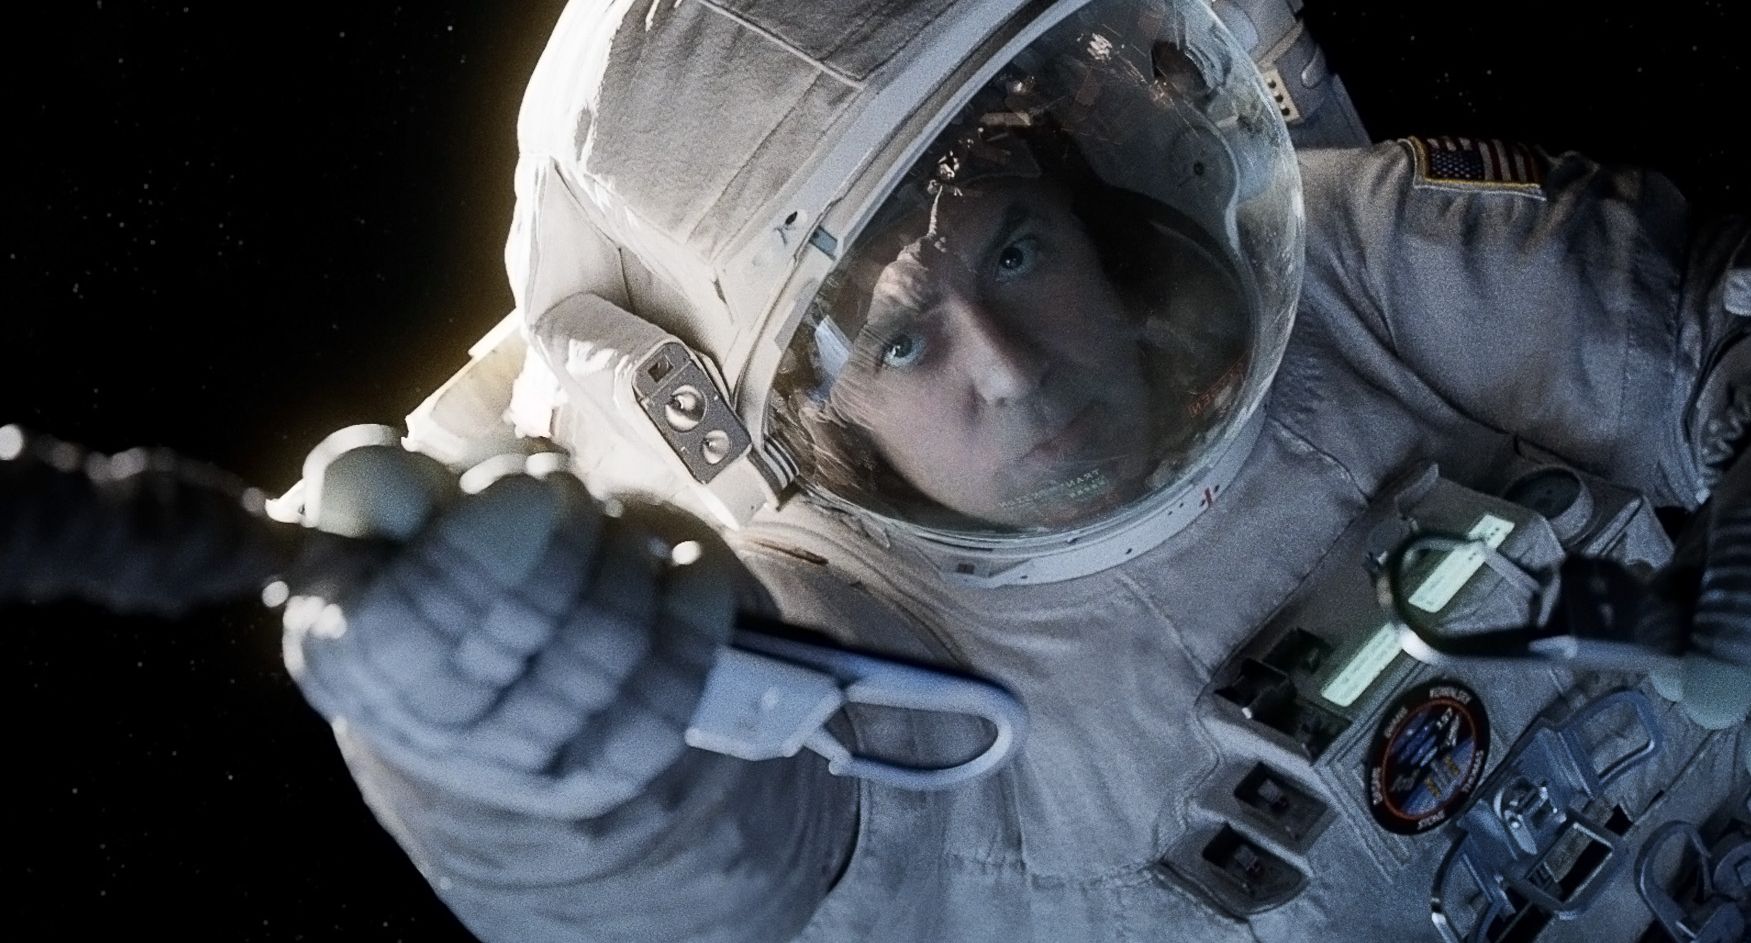 George Clooney in space